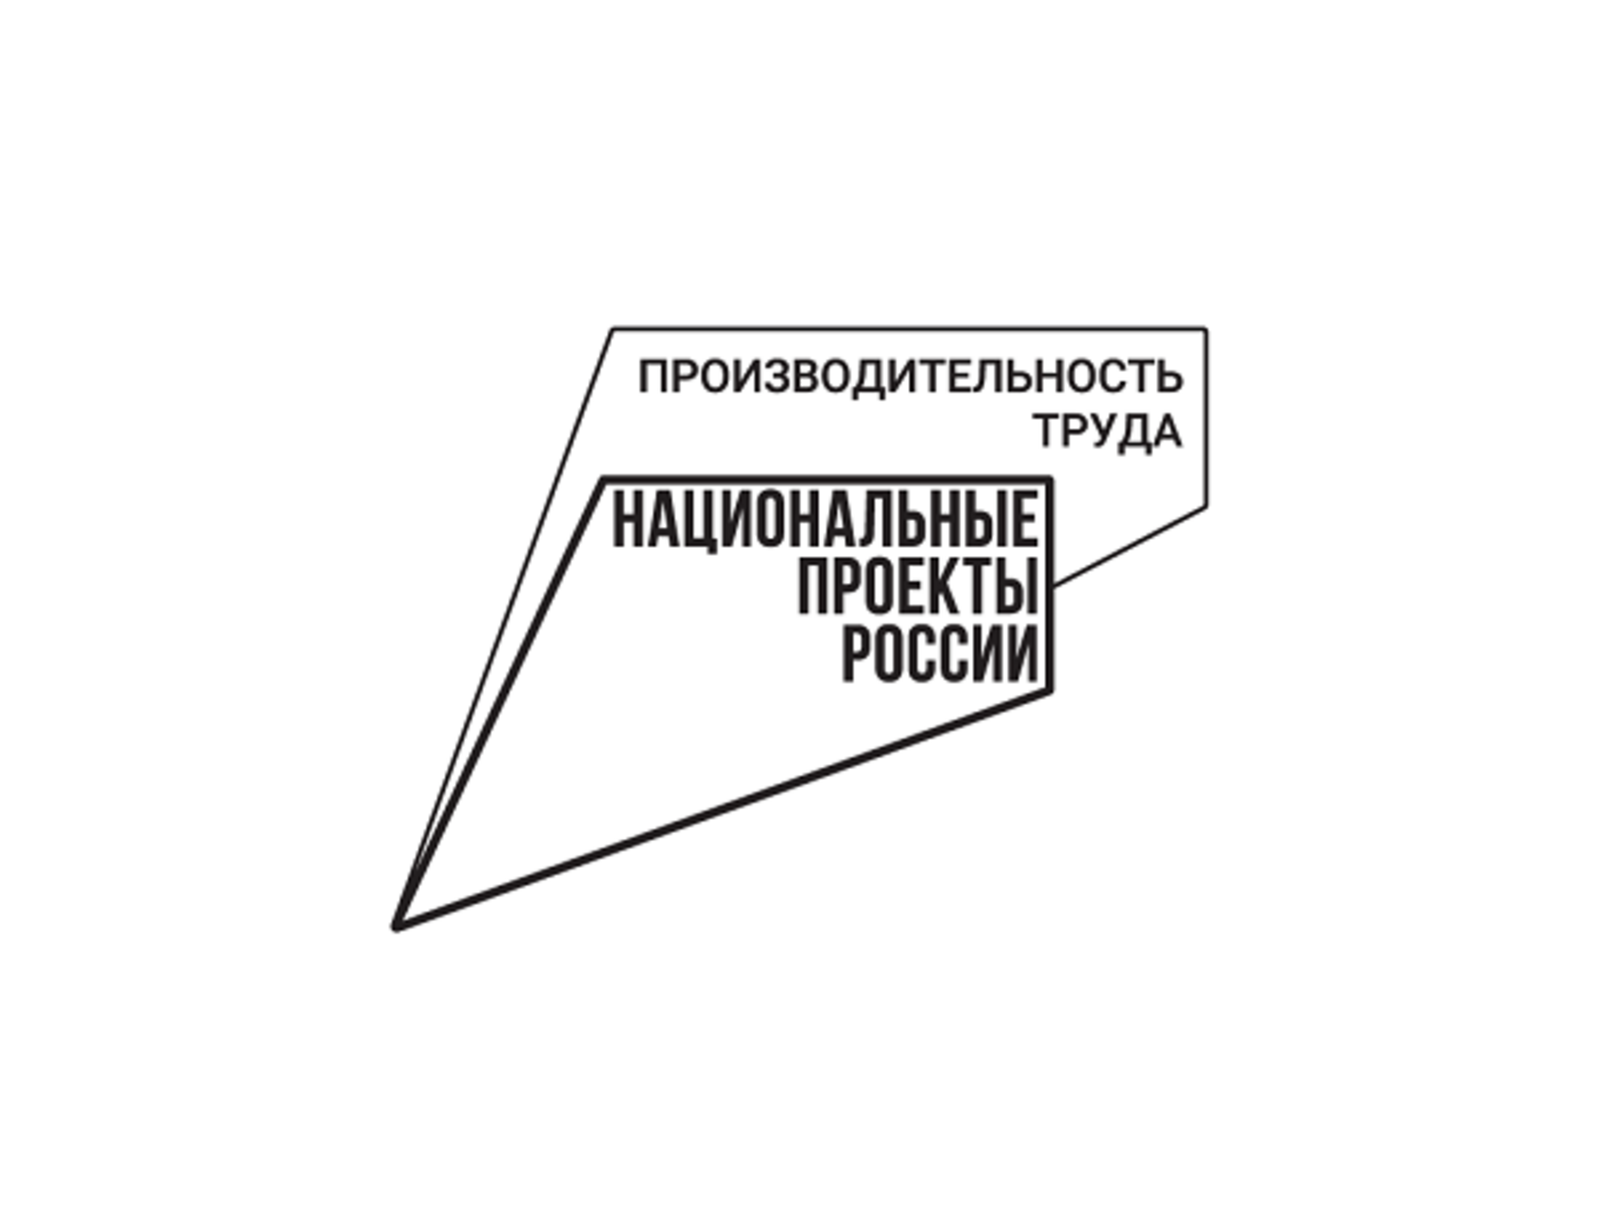 Участниками нацпроекта станут еще 140 предприятий Башкортостана